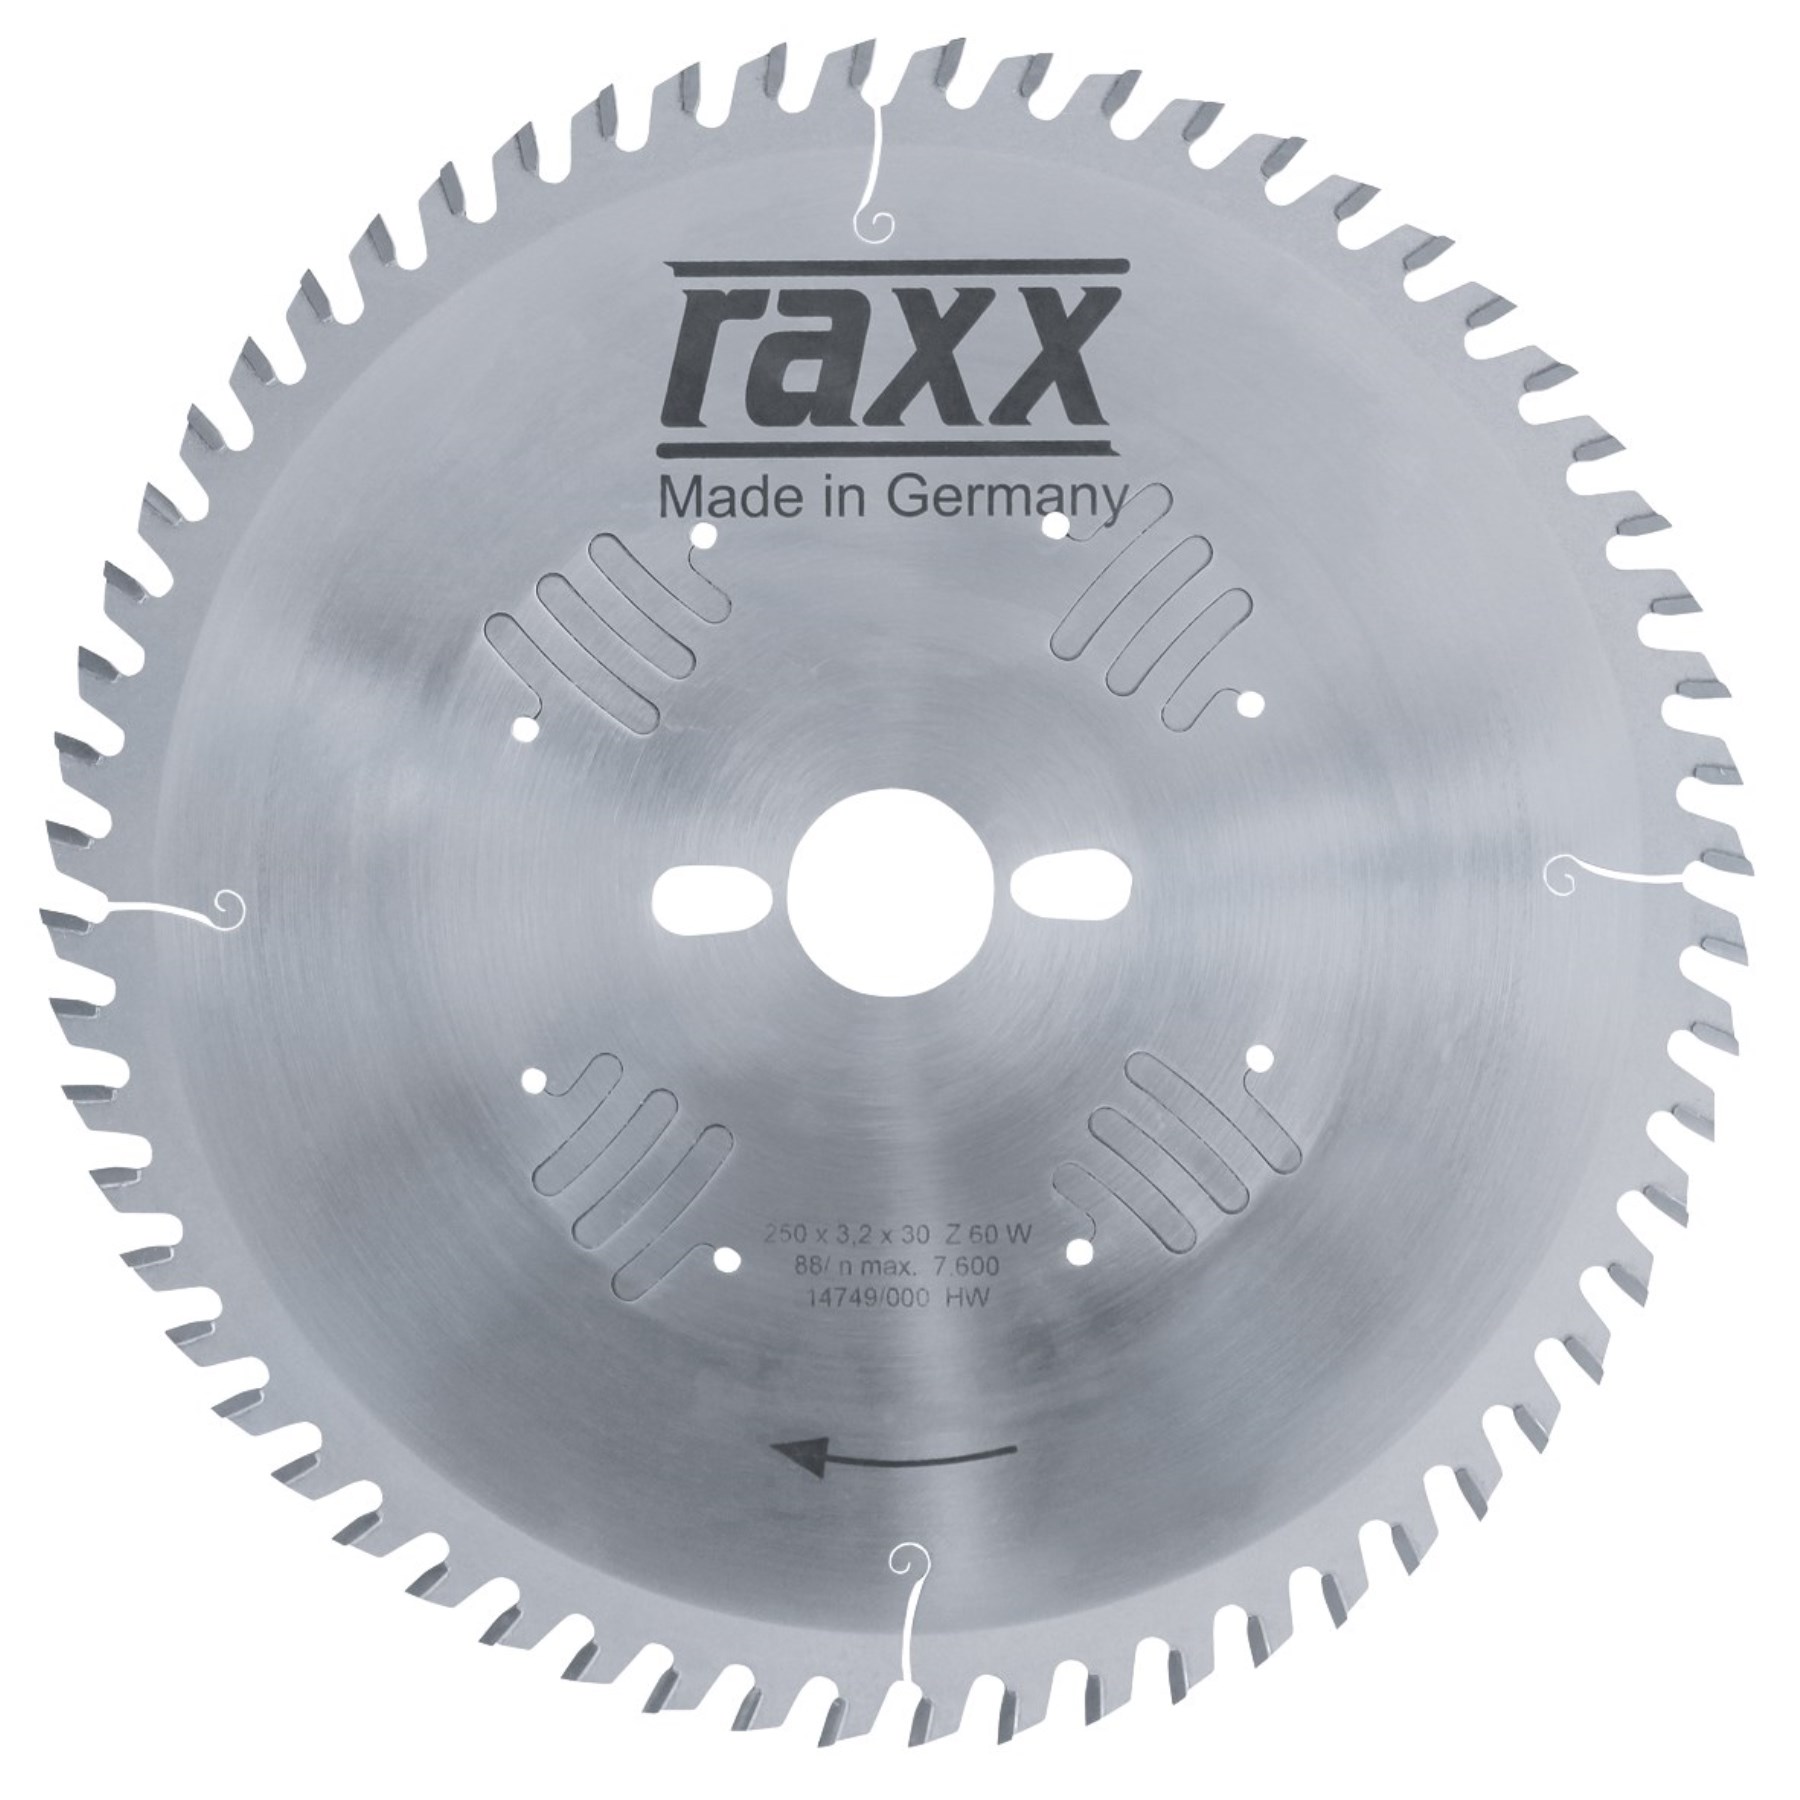 RAXX 1205071 kotouč k okružní pile HM 350x3,5x30 [ 55350300840060400 ]